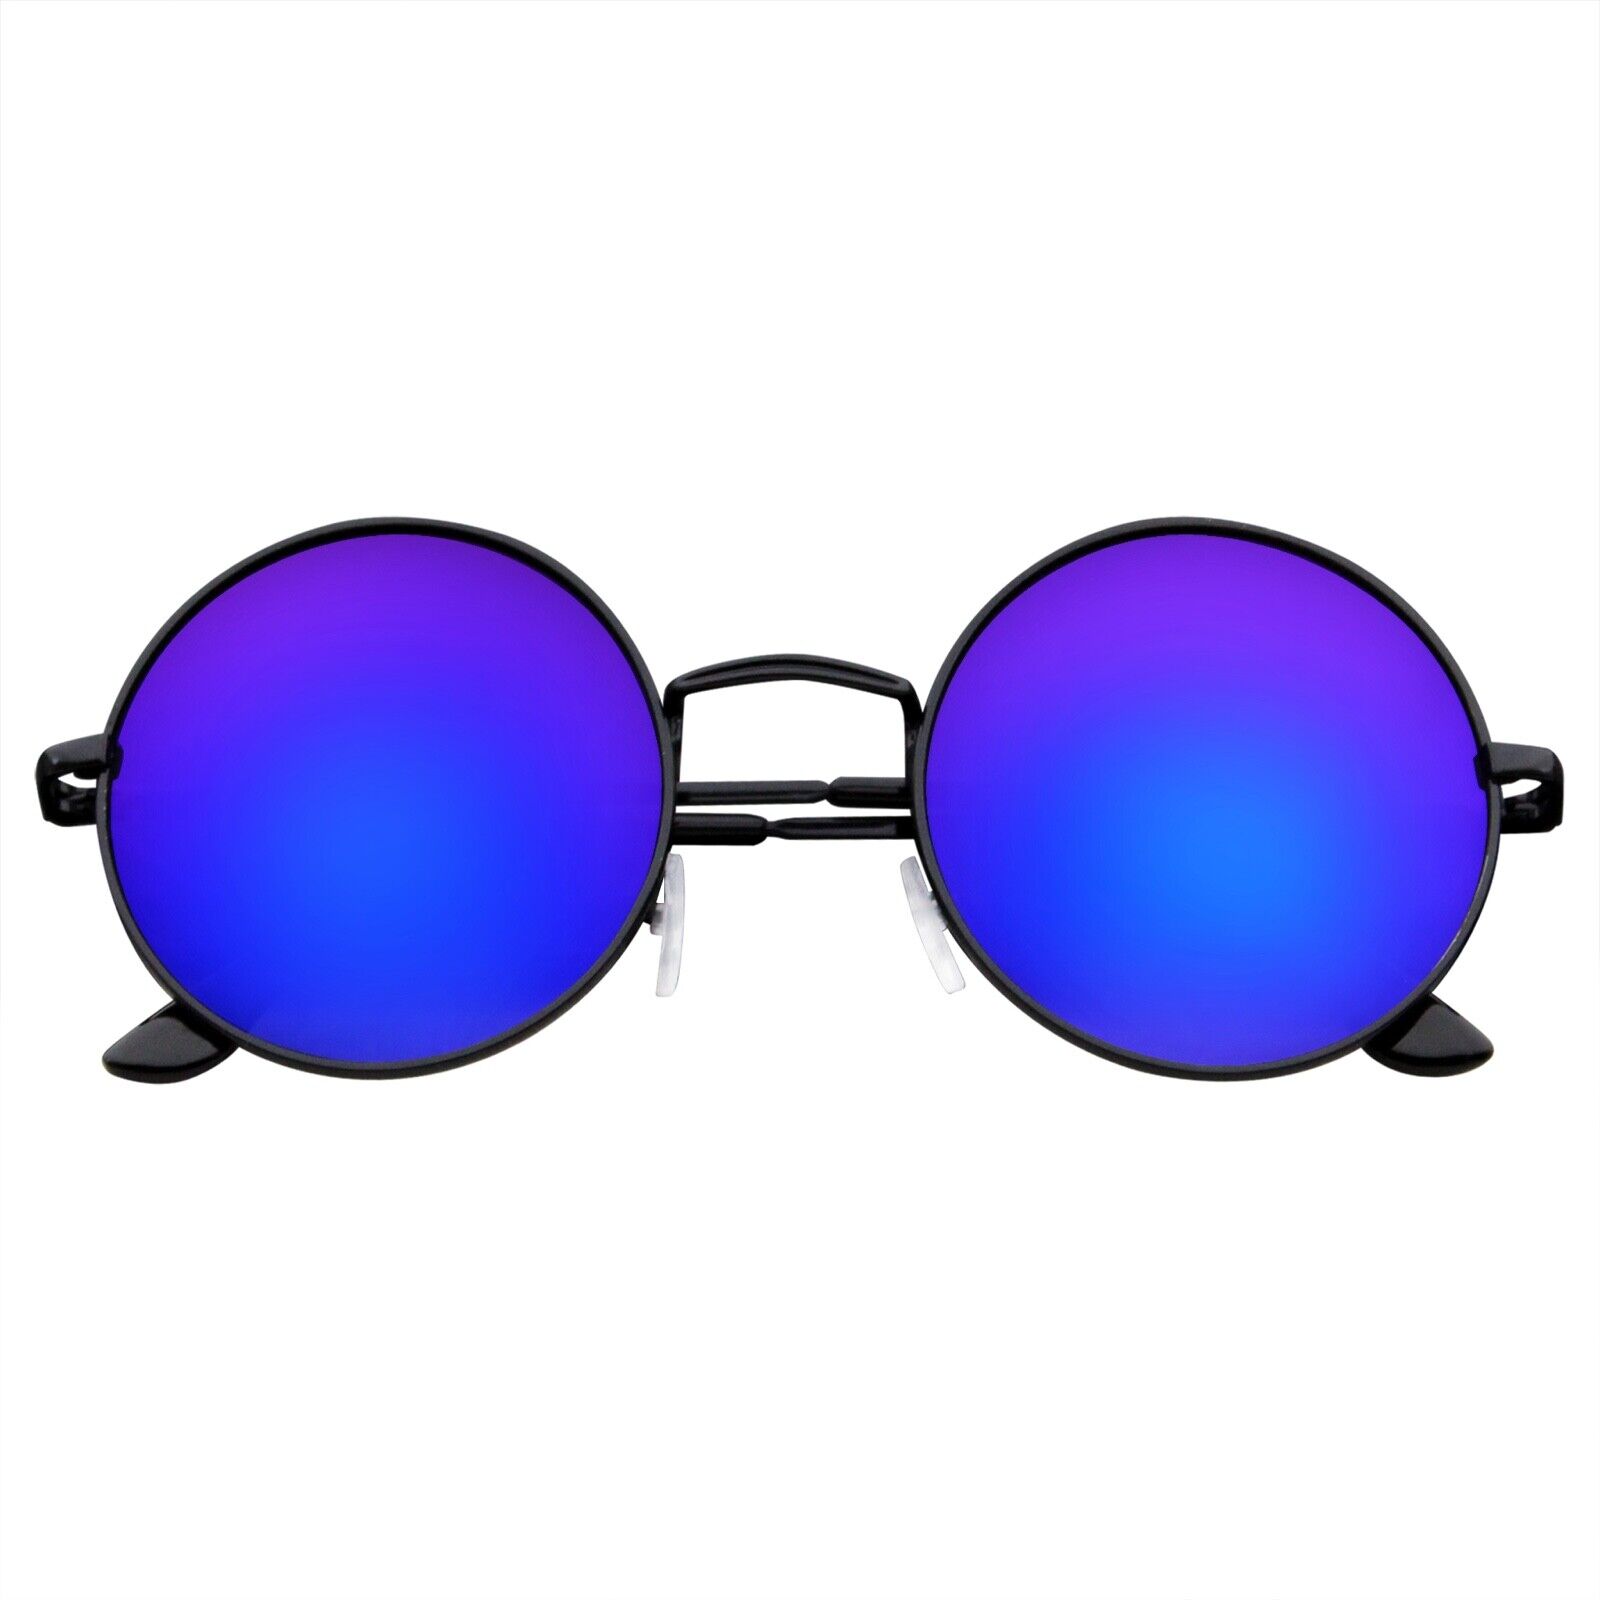 John Lennon Sunglasses Round Sunglasses Retro Vintage 60s 70s Hippie Sun Glasses